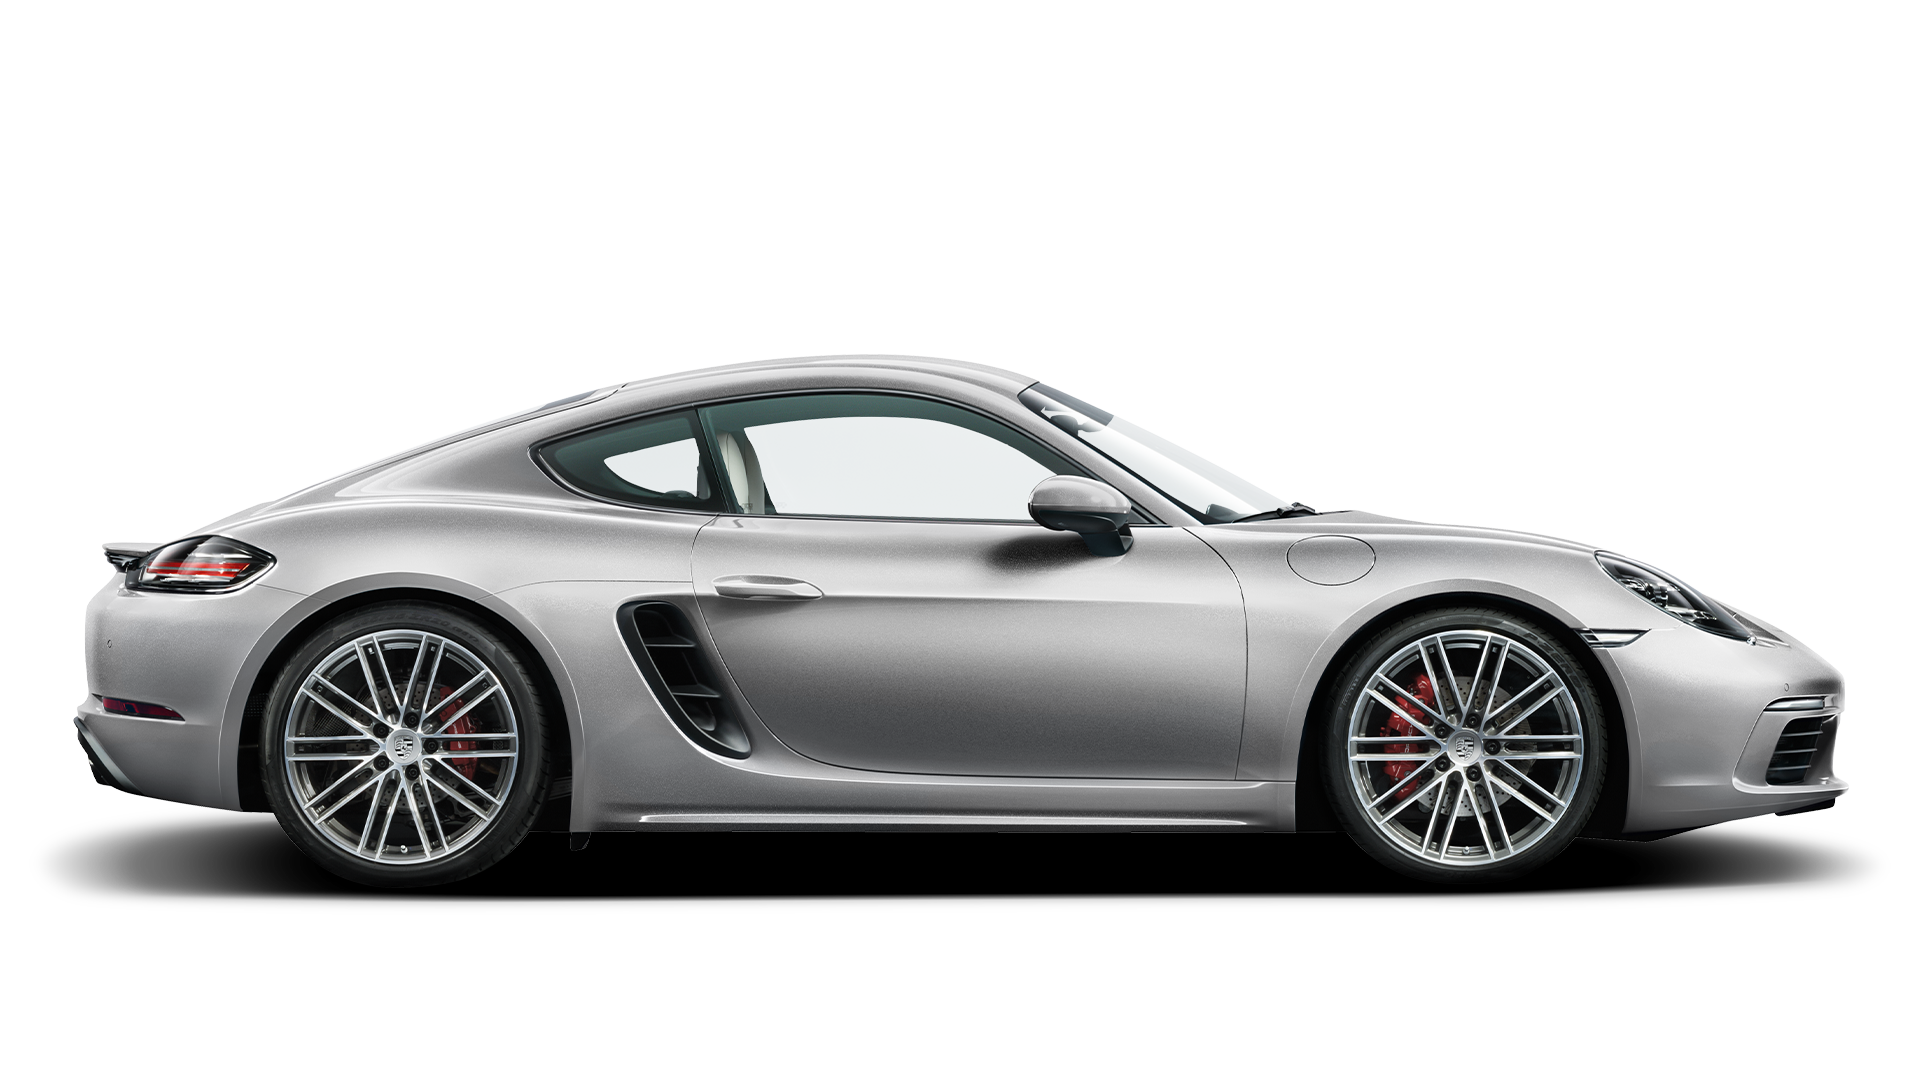 Porsche Cayman exterior - Side Profile